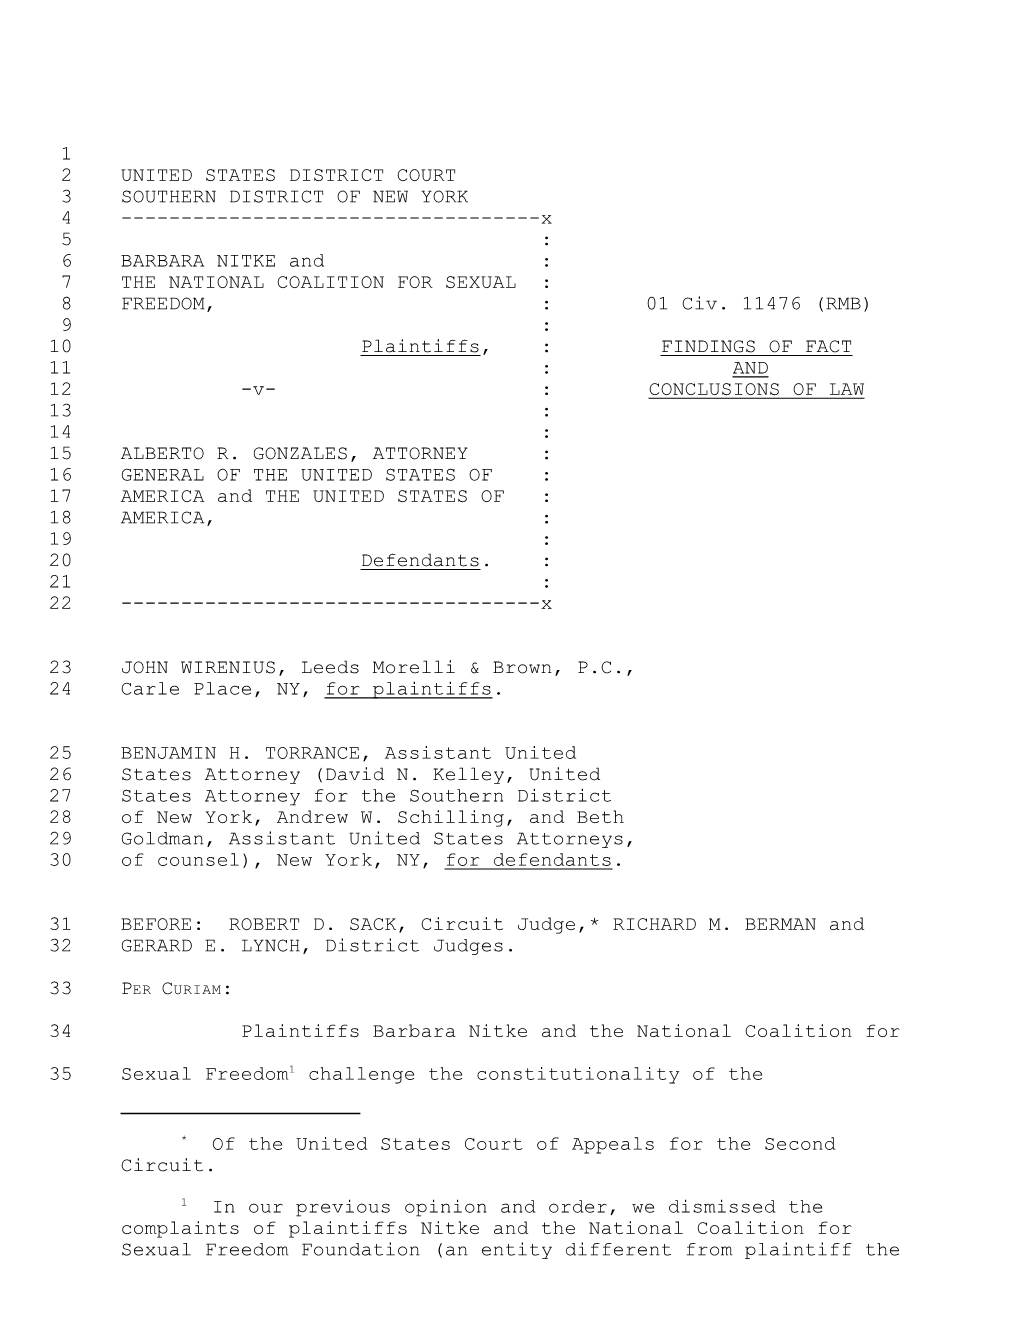 PDF of Court Decision